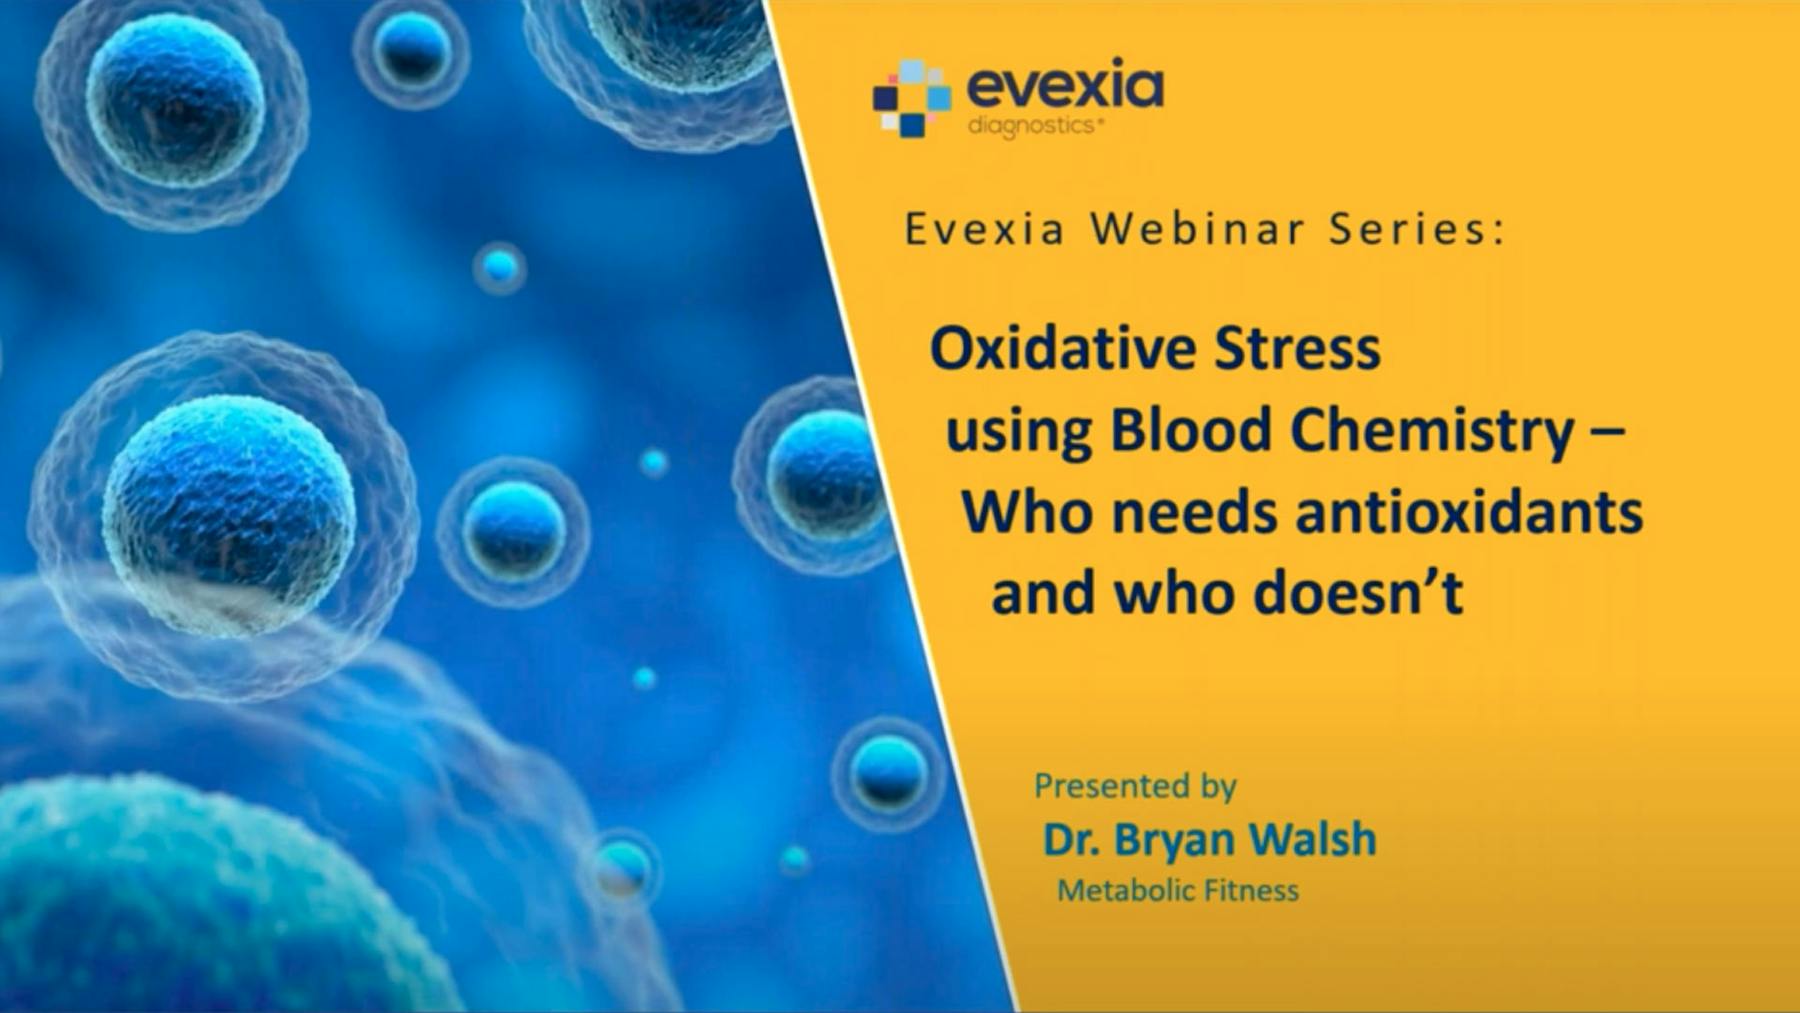 Blood Oxidative Stress